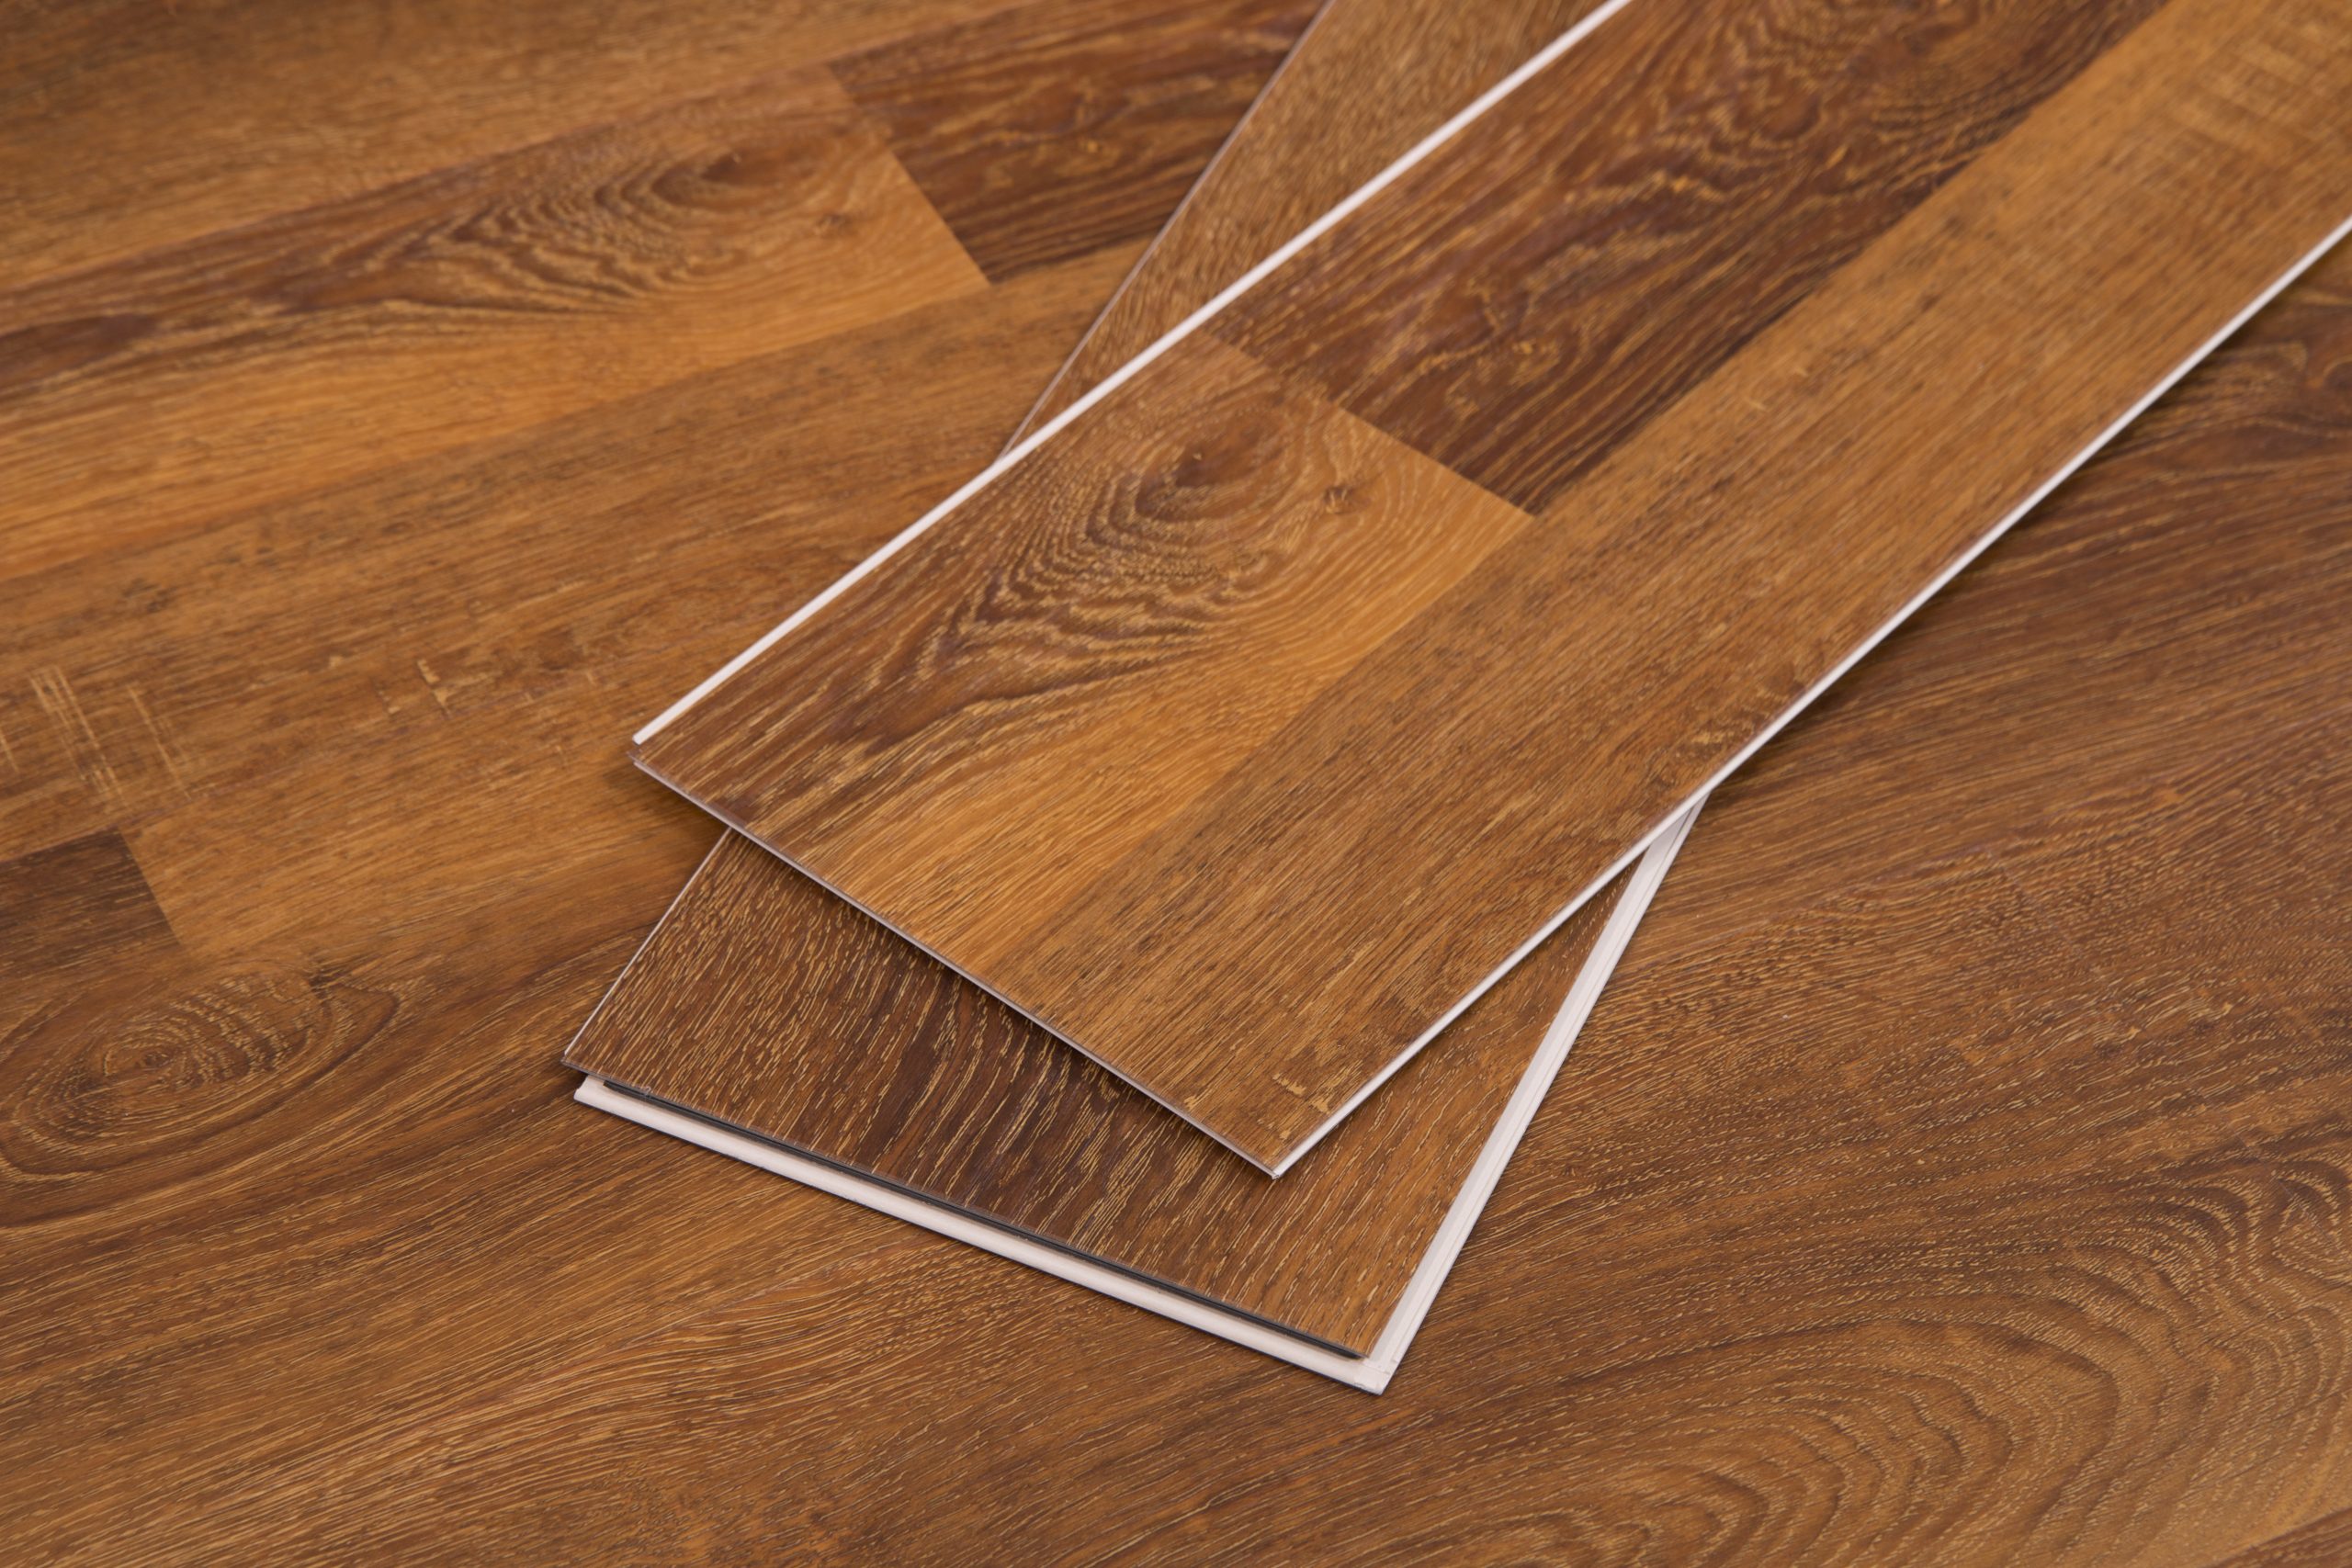 Saddlewood Pro Wide With I4f, Commercial Grade Hardwood Flooring